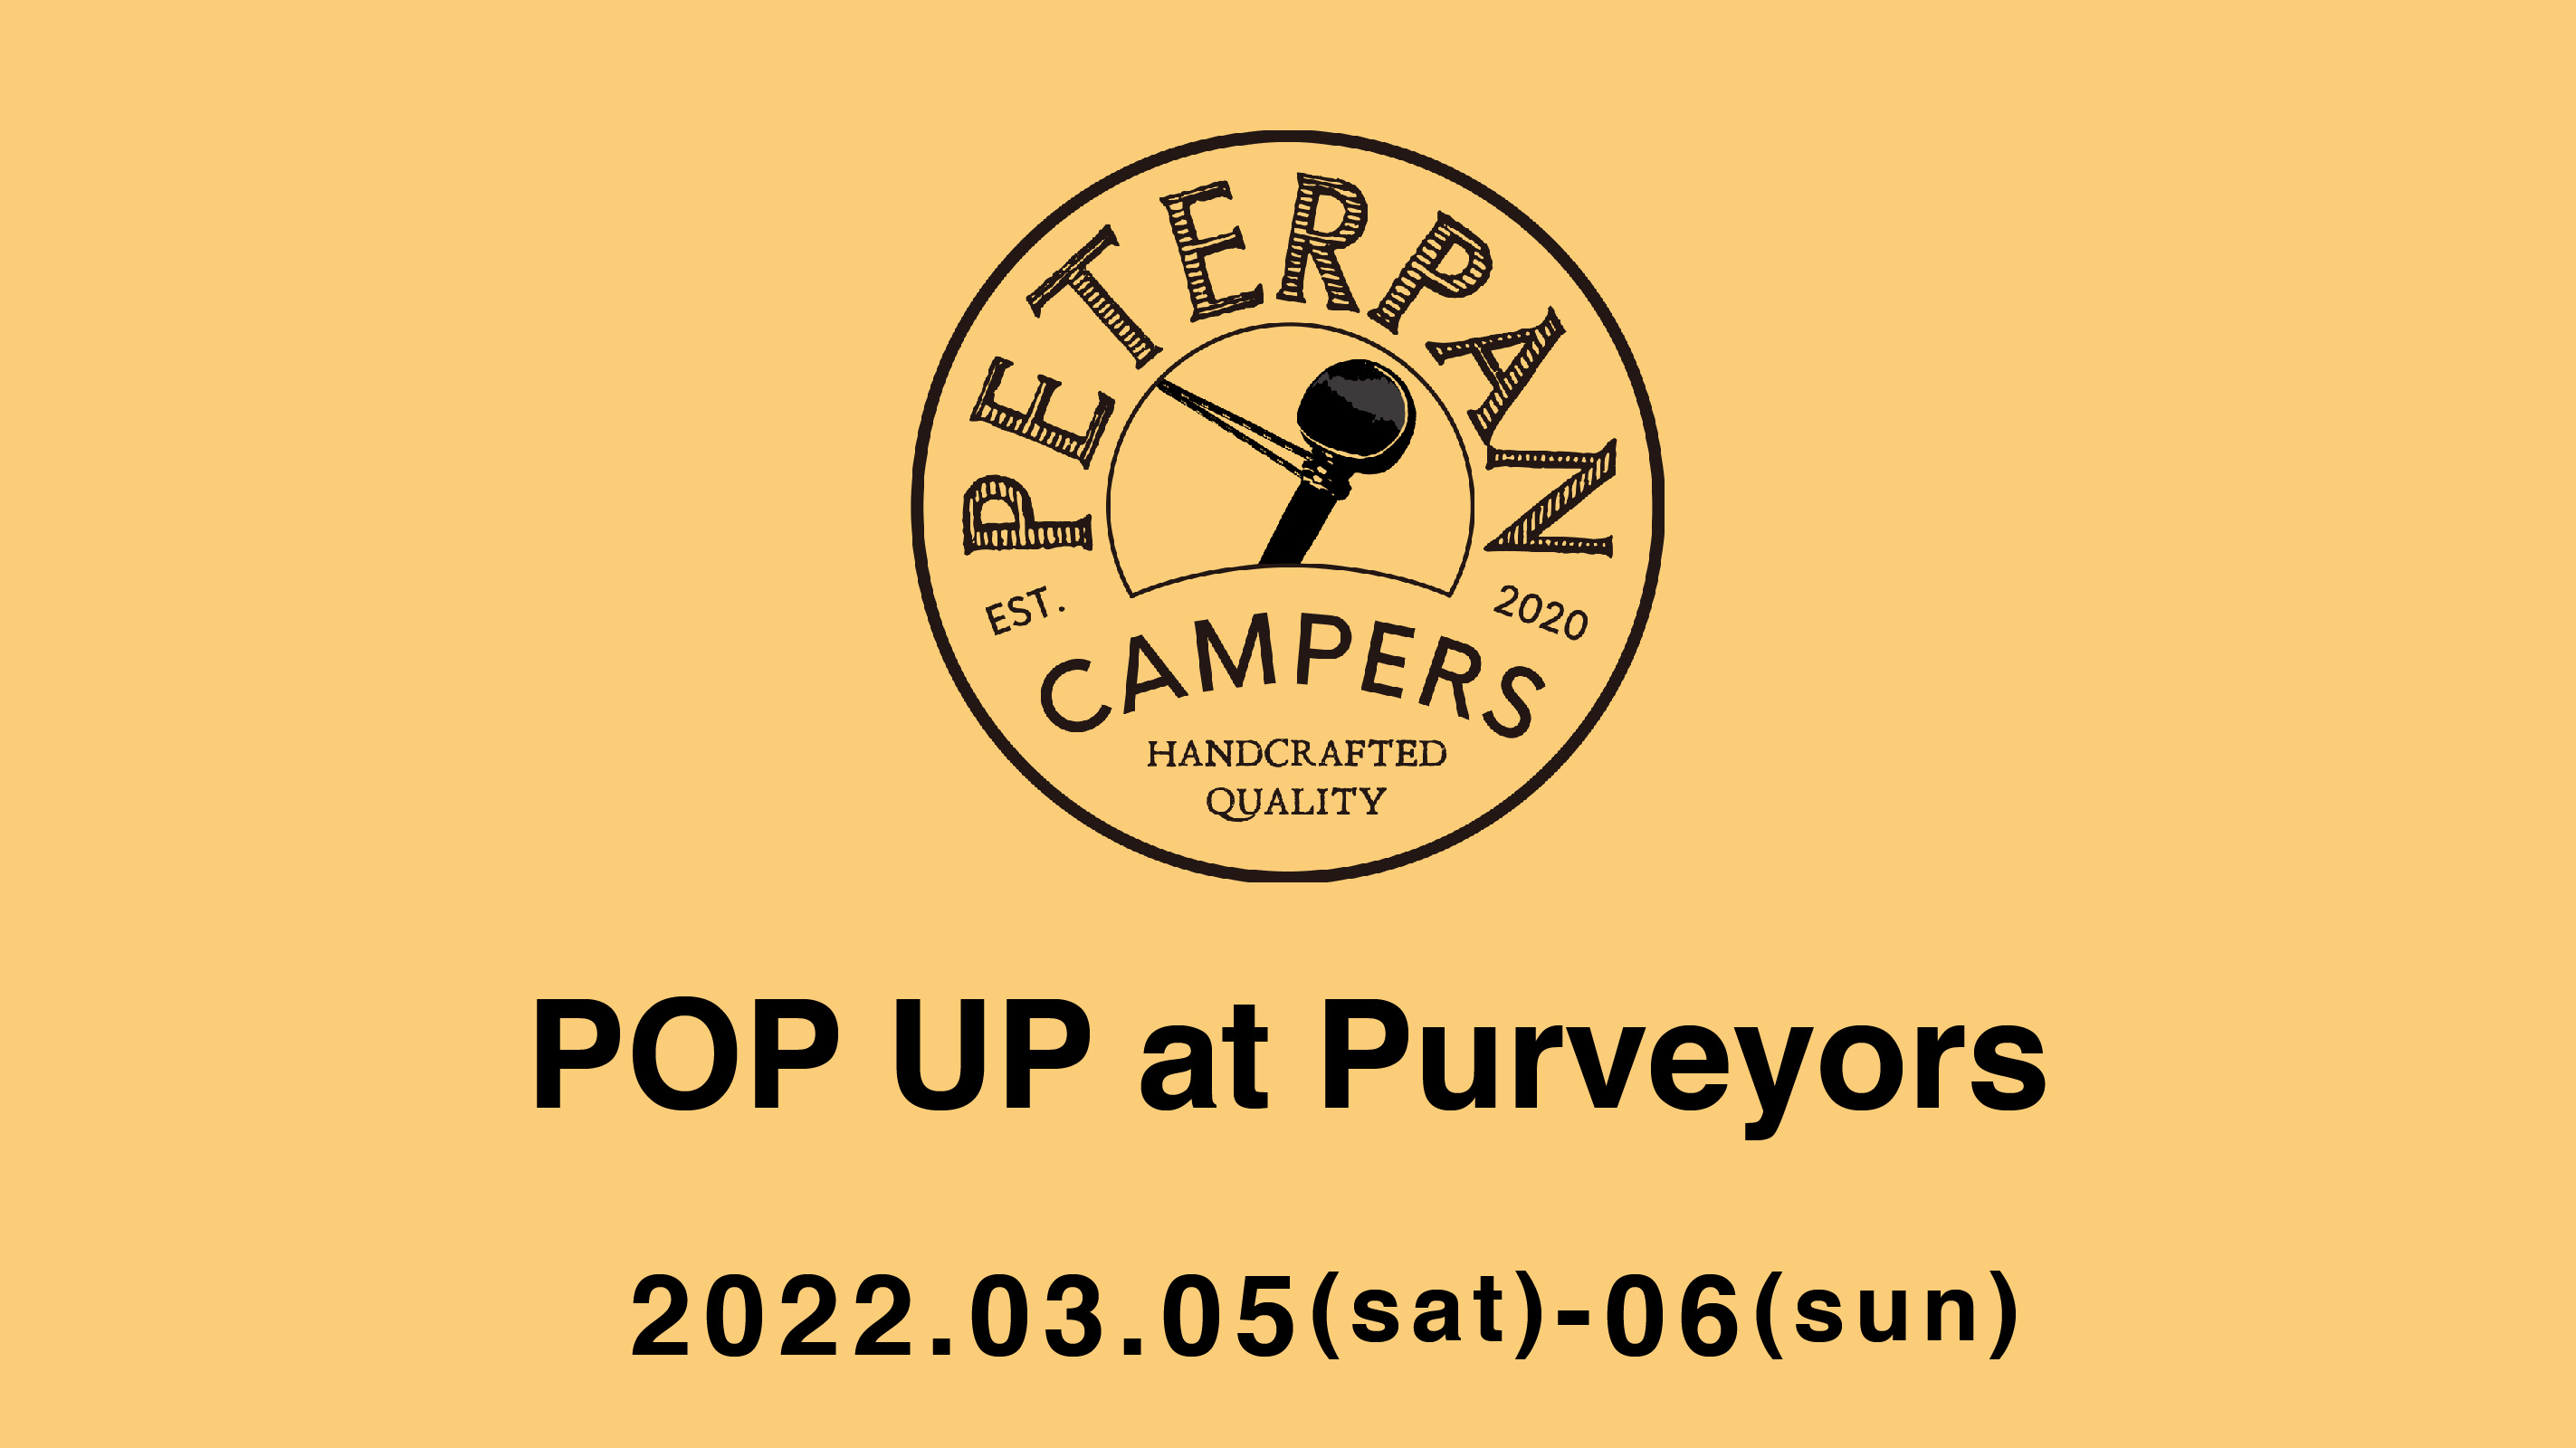 3/5-6 PETERPAN CAMPERS POP UP at Purveyors